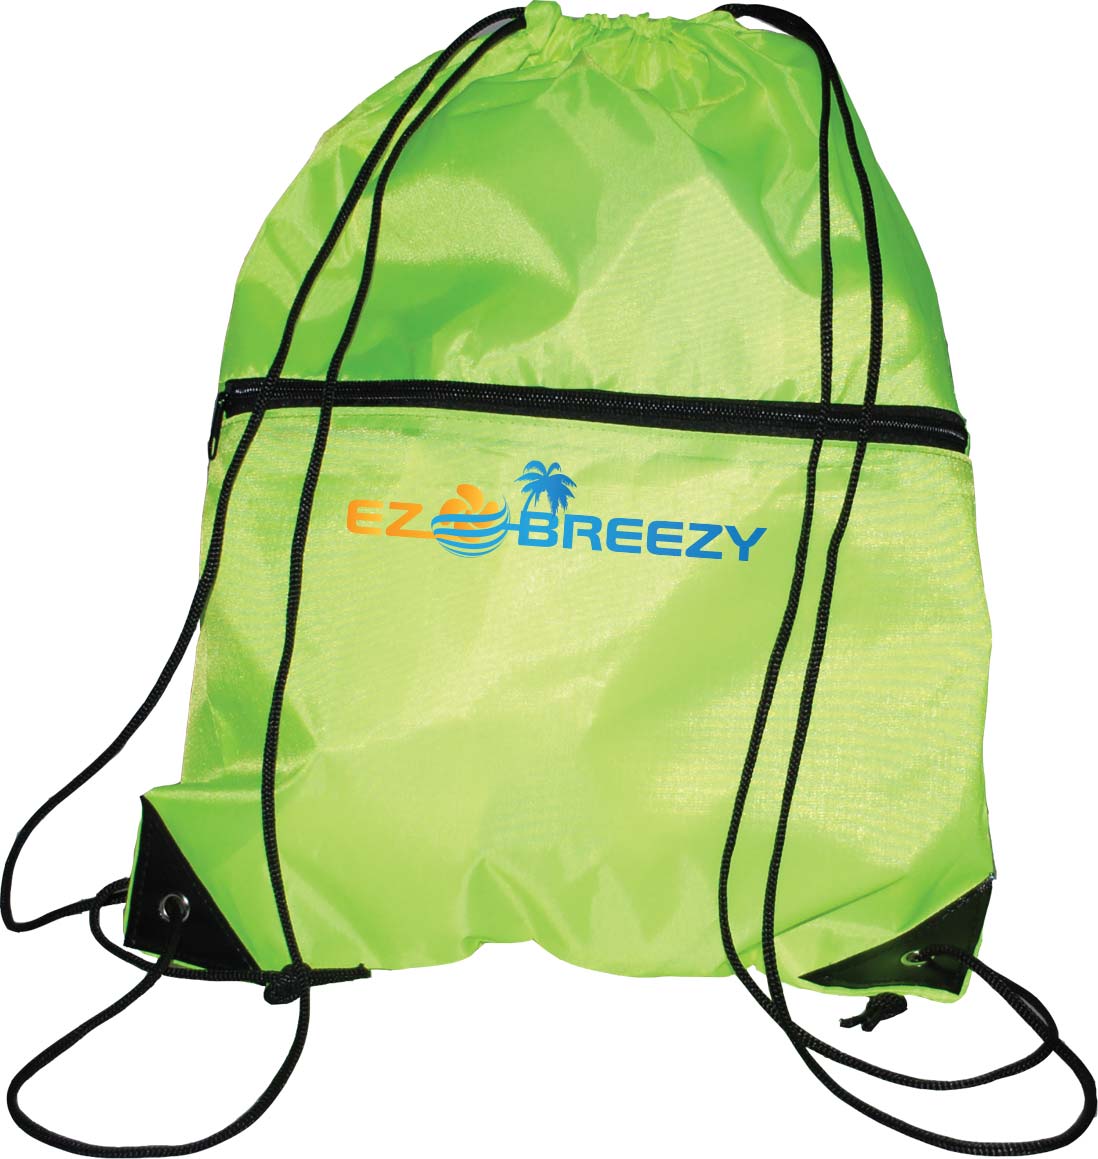 EZ Breezy Drawstring storage bag only